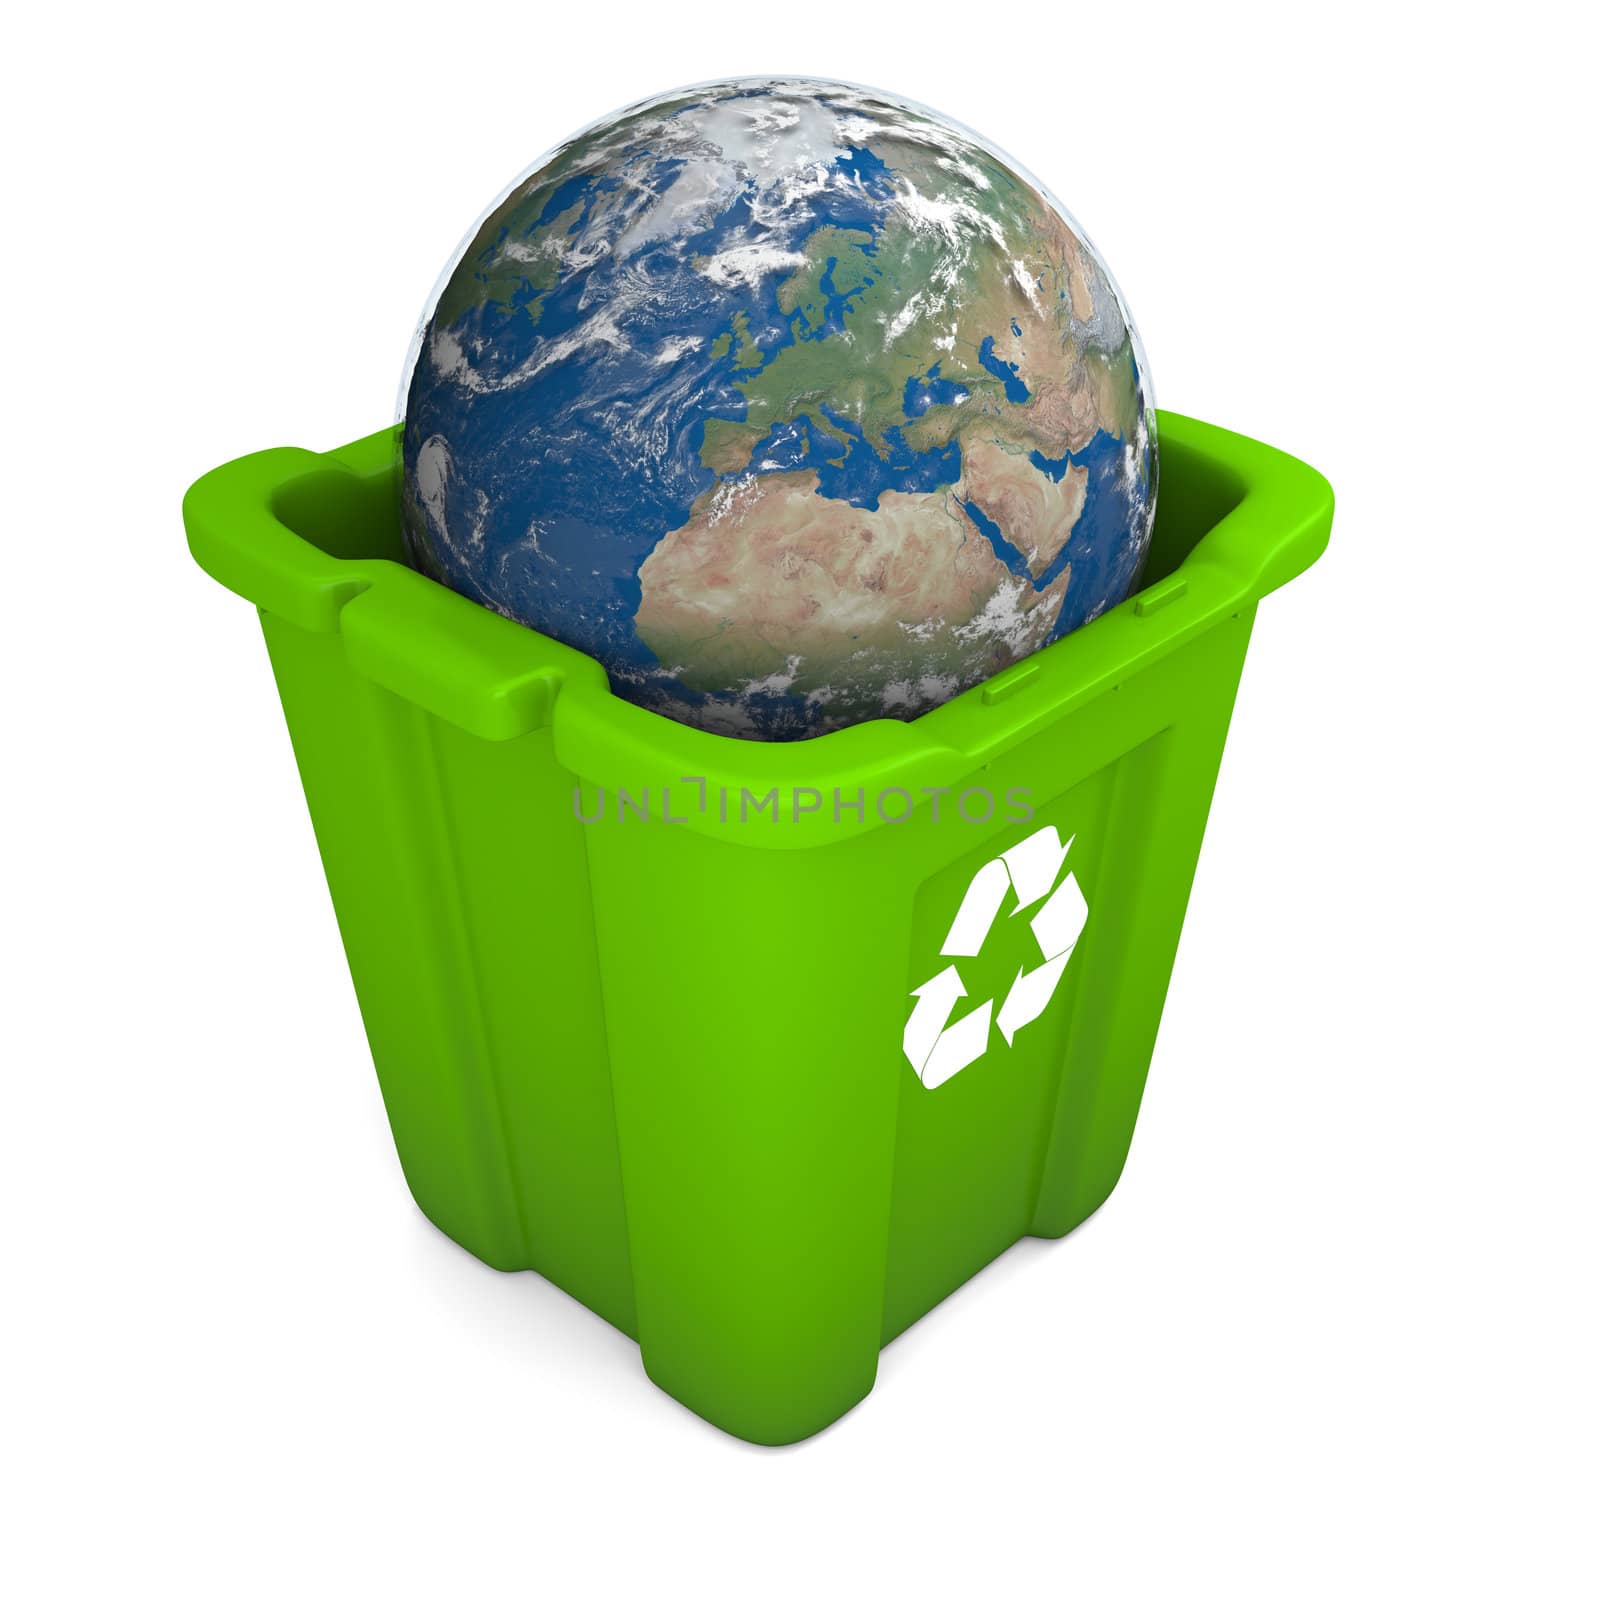 Earth in recycle bin by Harvepino